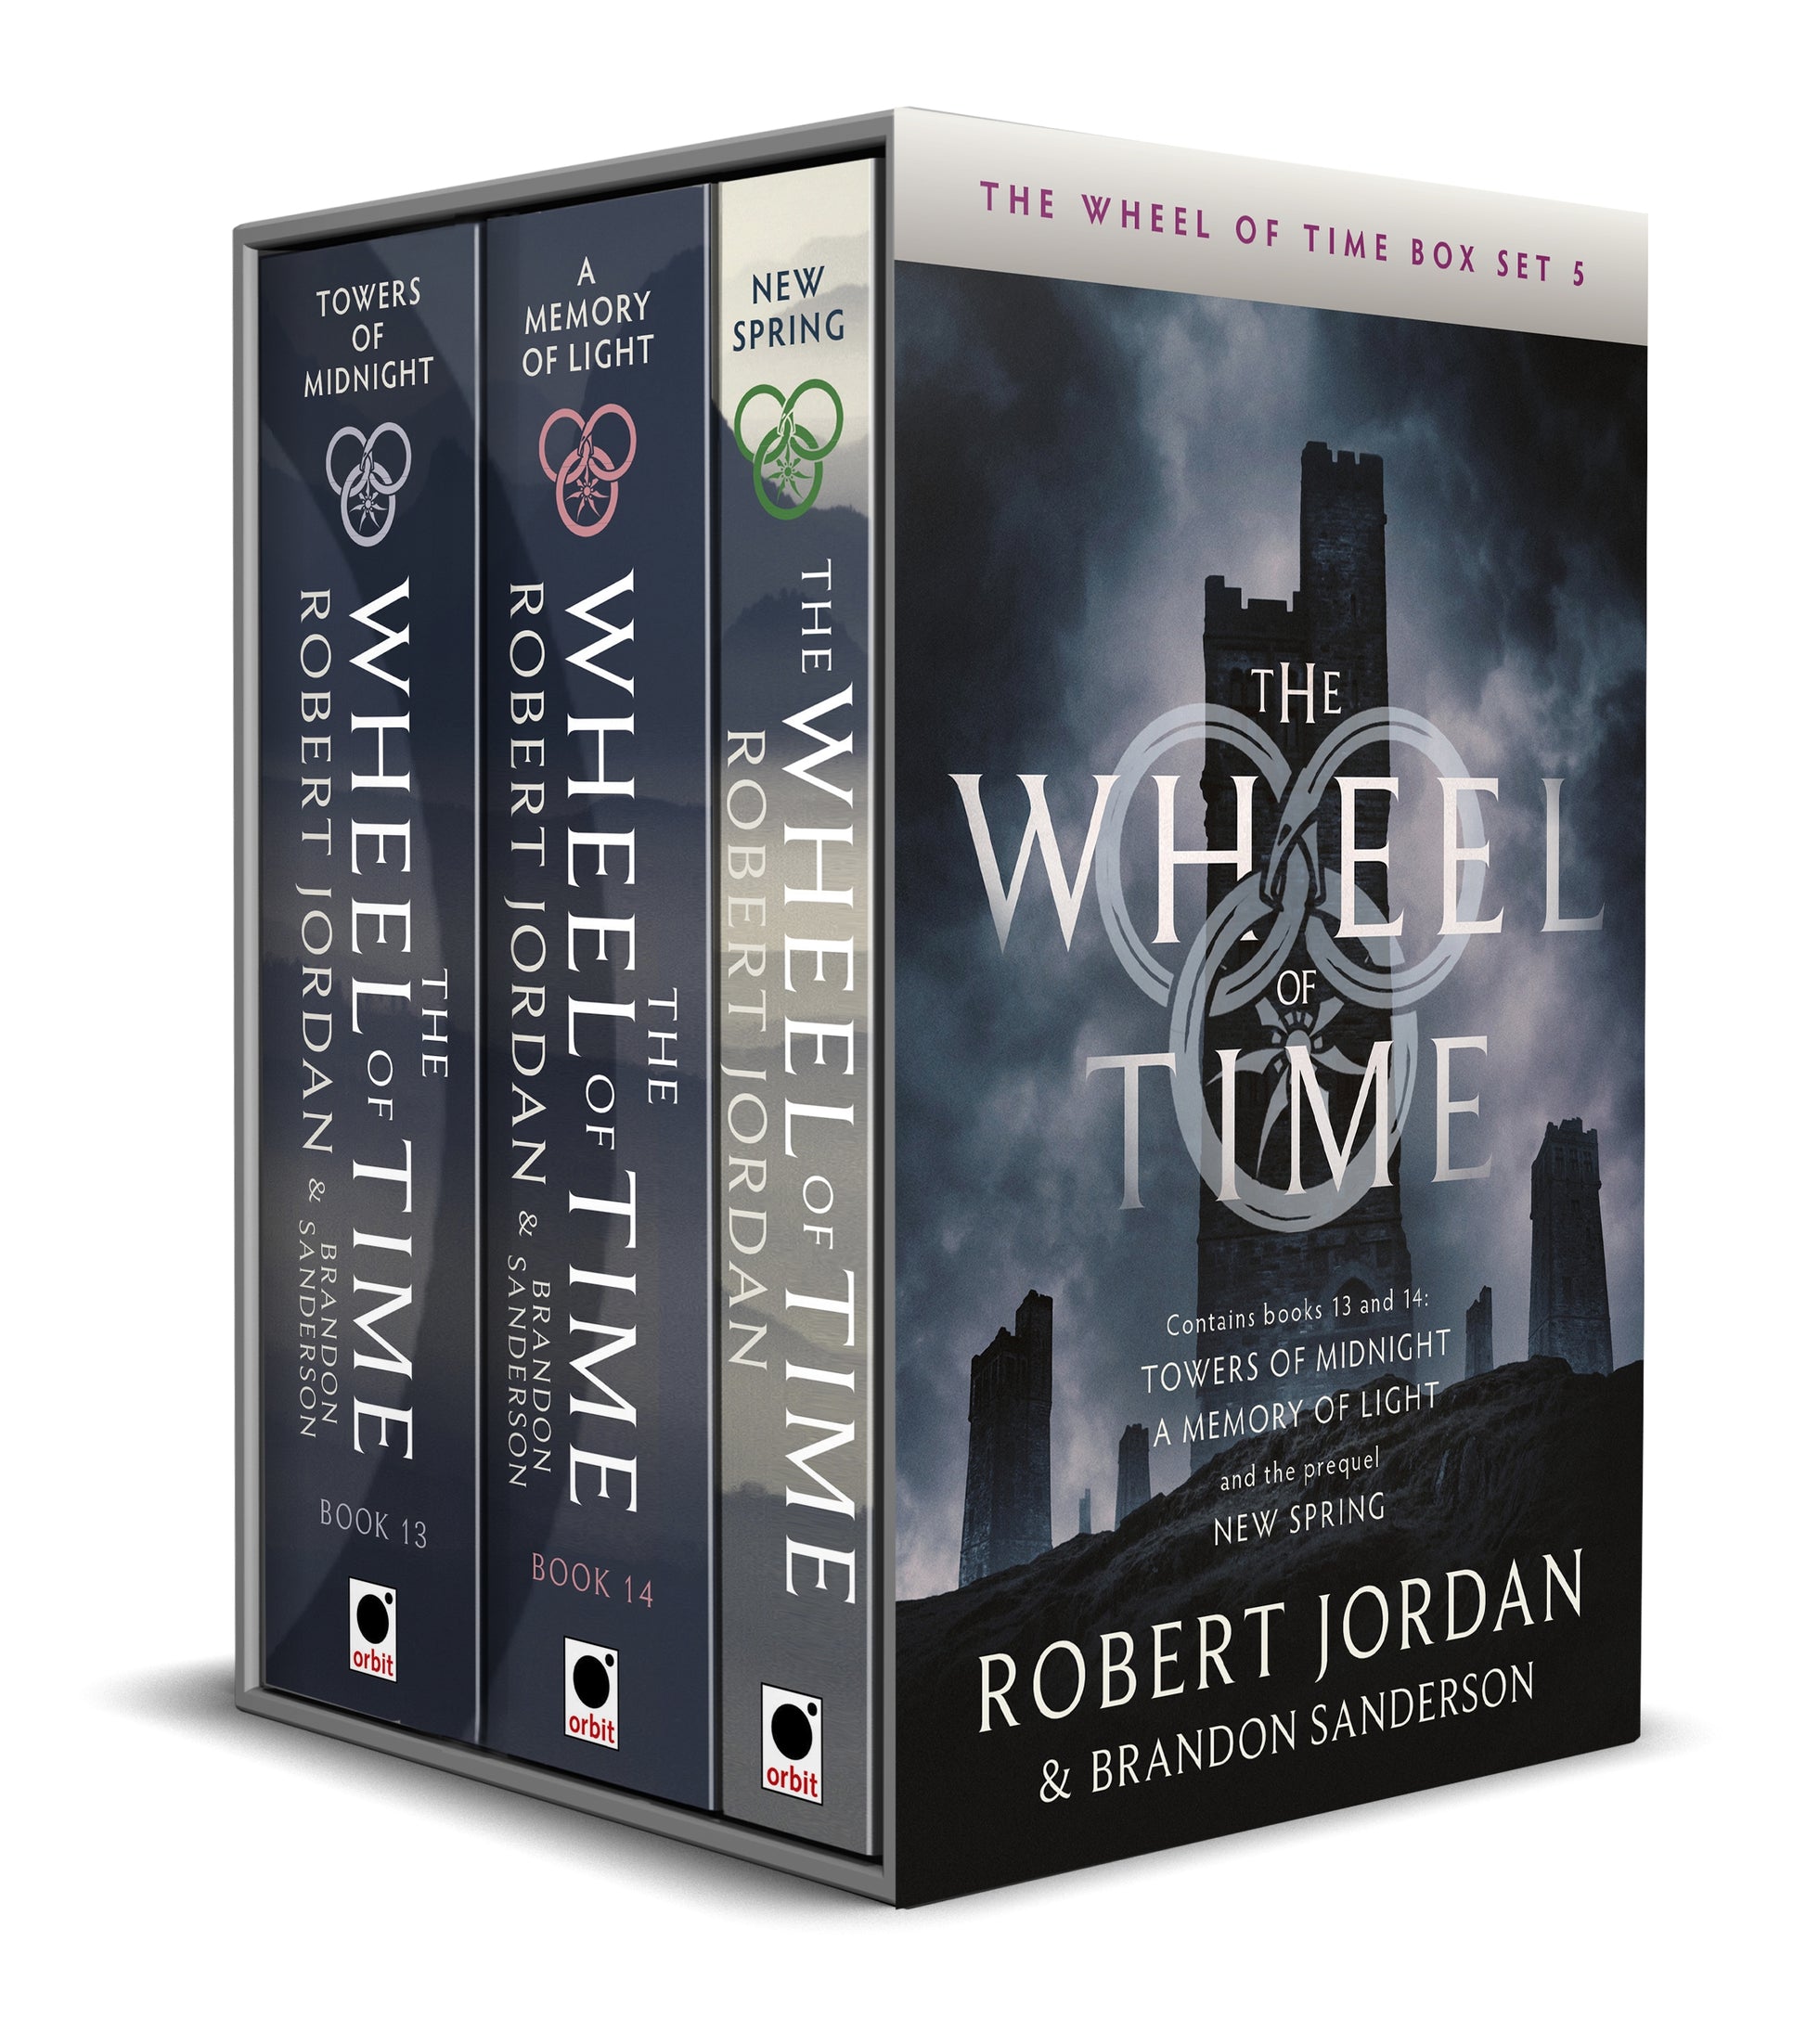 The Wheel of Time Box Set 5 by Robert Jordan